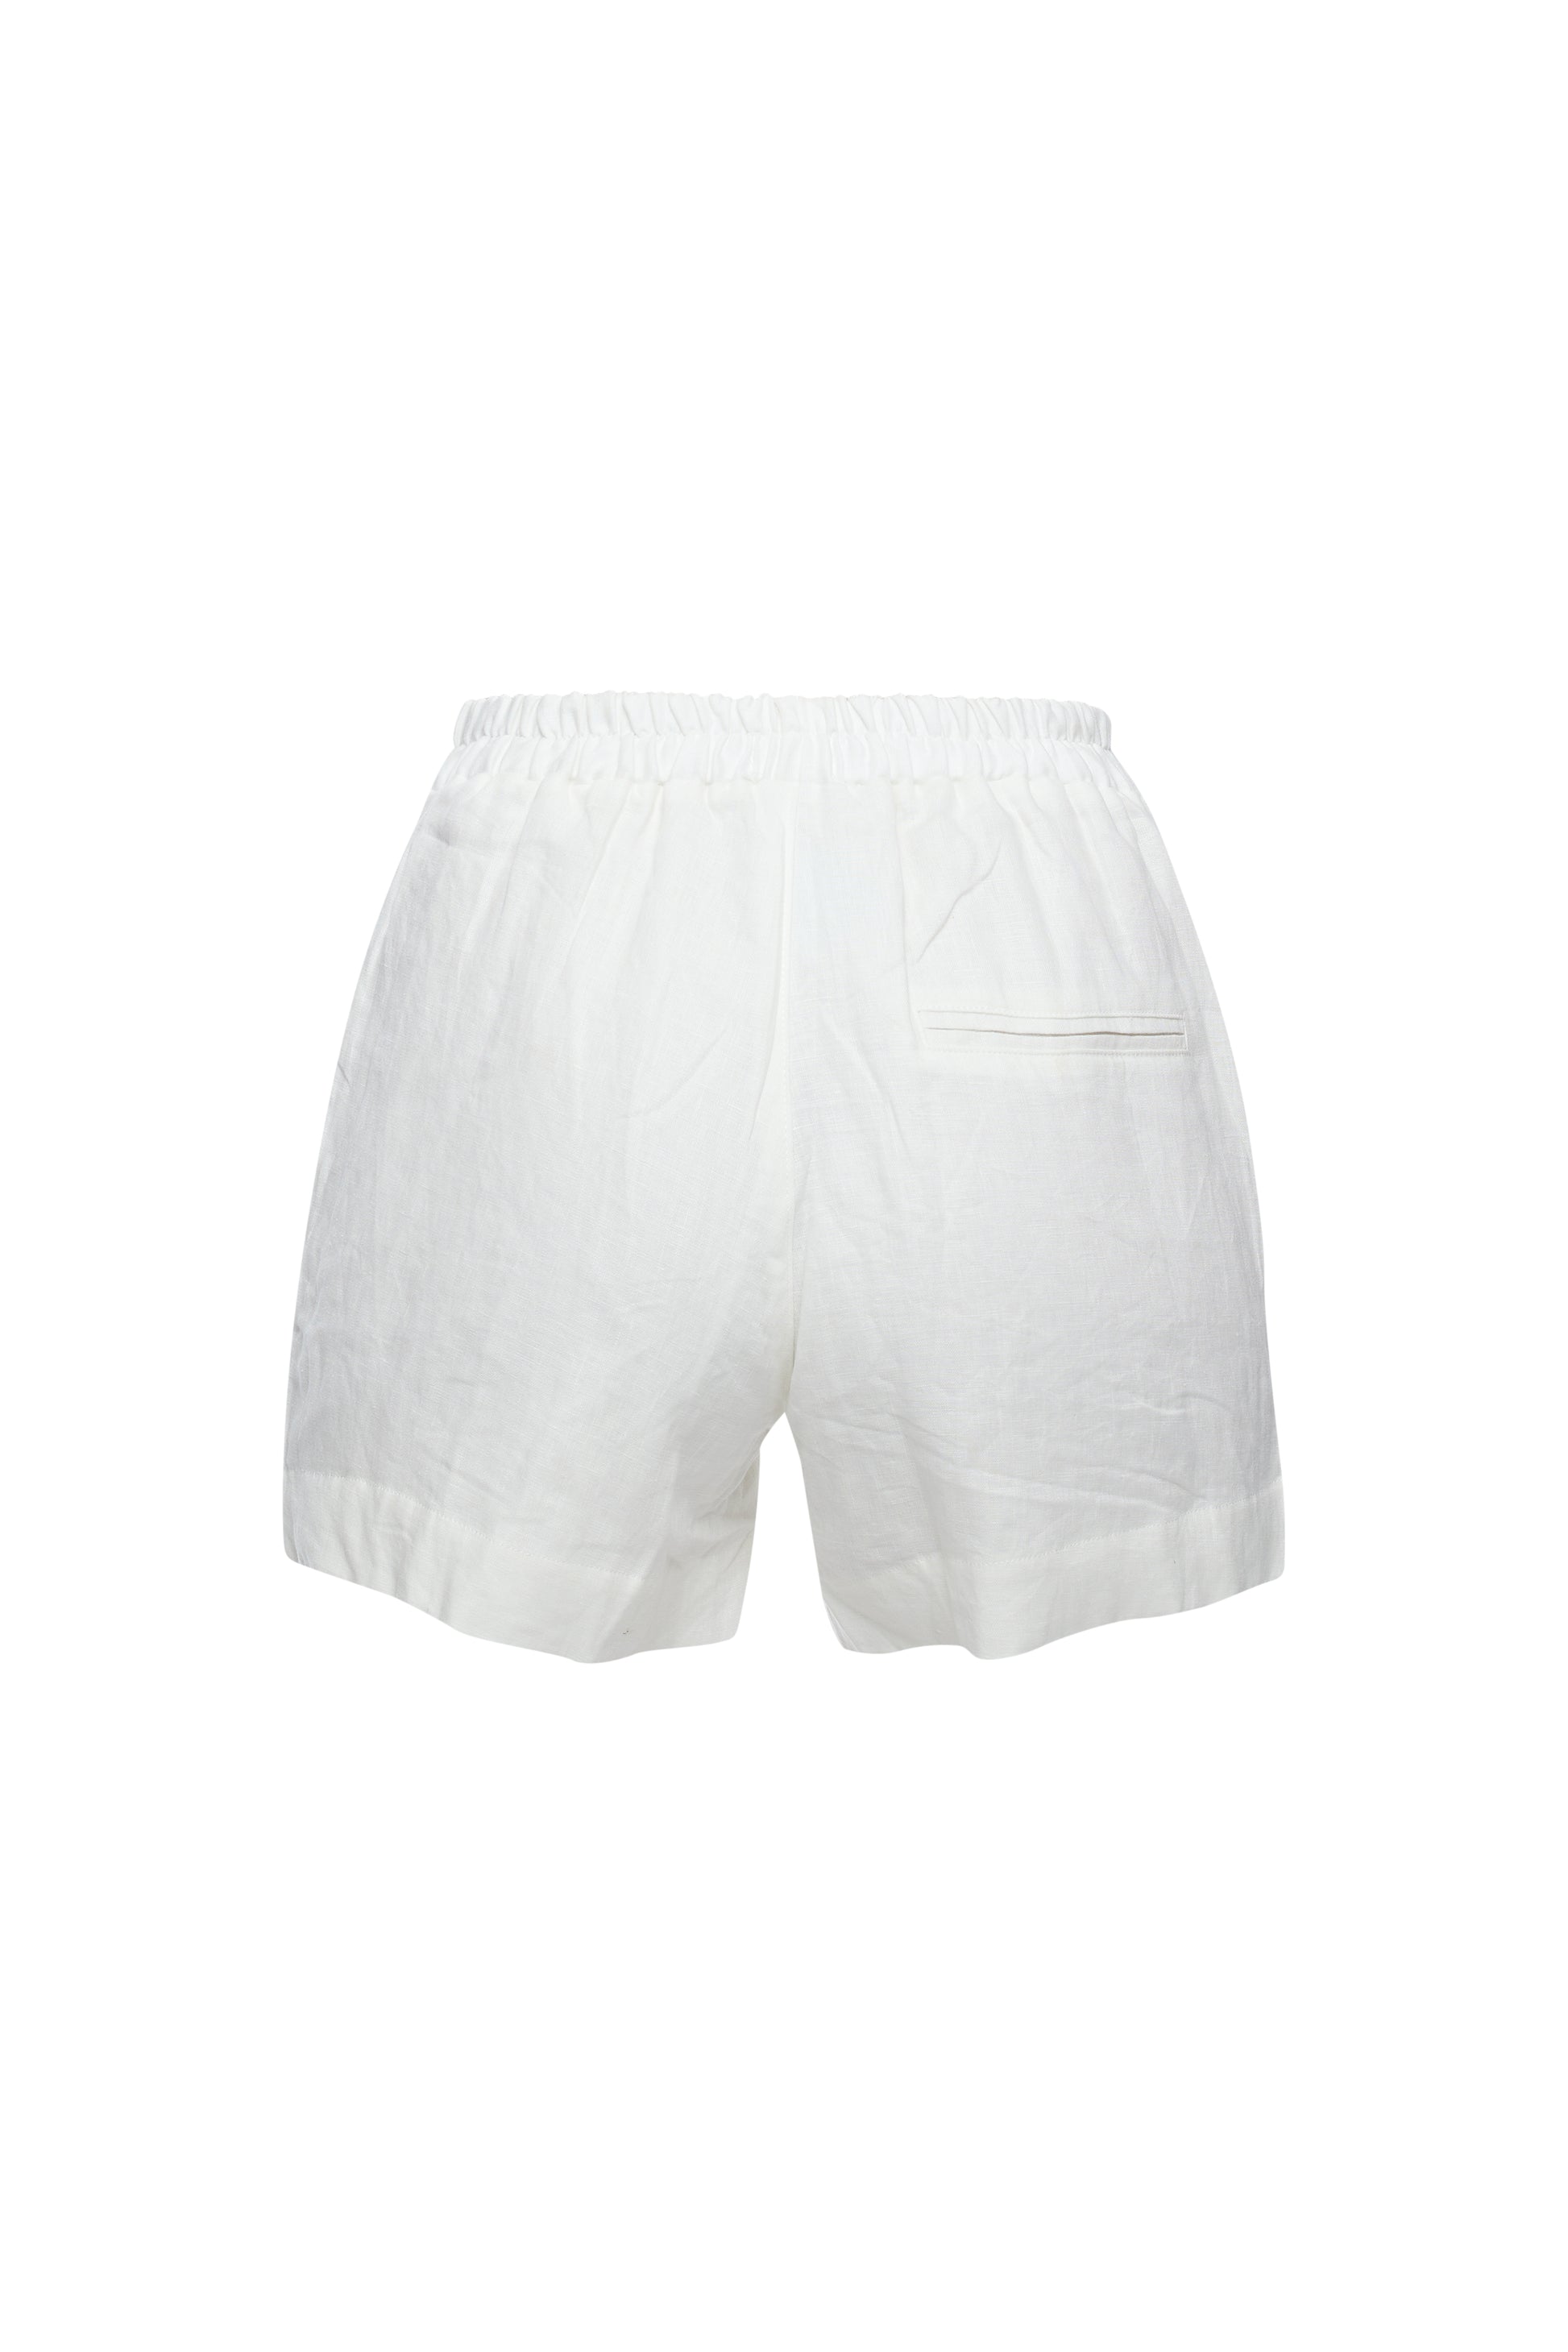 Beach Cove Midrise Linen-Blend Shorts in White • Impressions